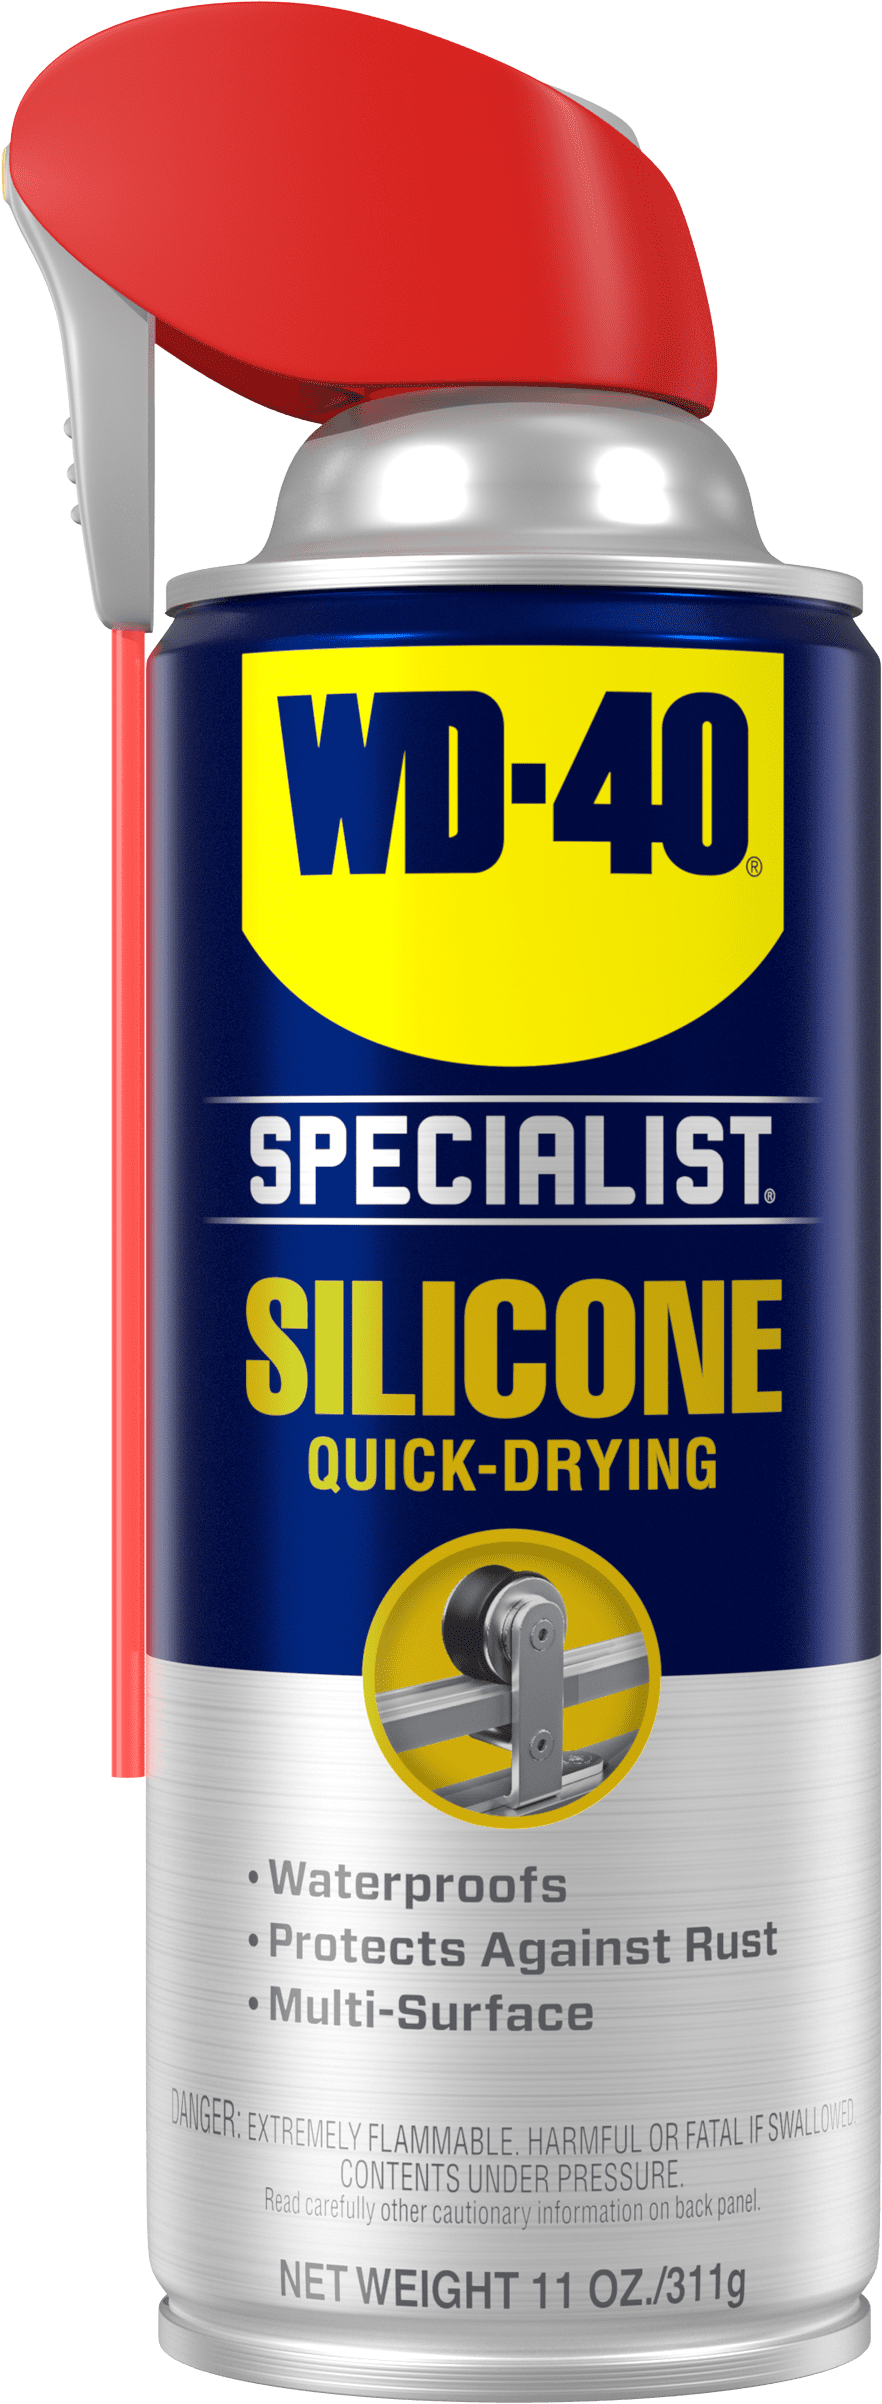 WD-40 Multi-Use Product, One Gallon & Specialist Silicone Lubricant with  SMART STRAW SPRAYS 2 WAYS, 11 OZ